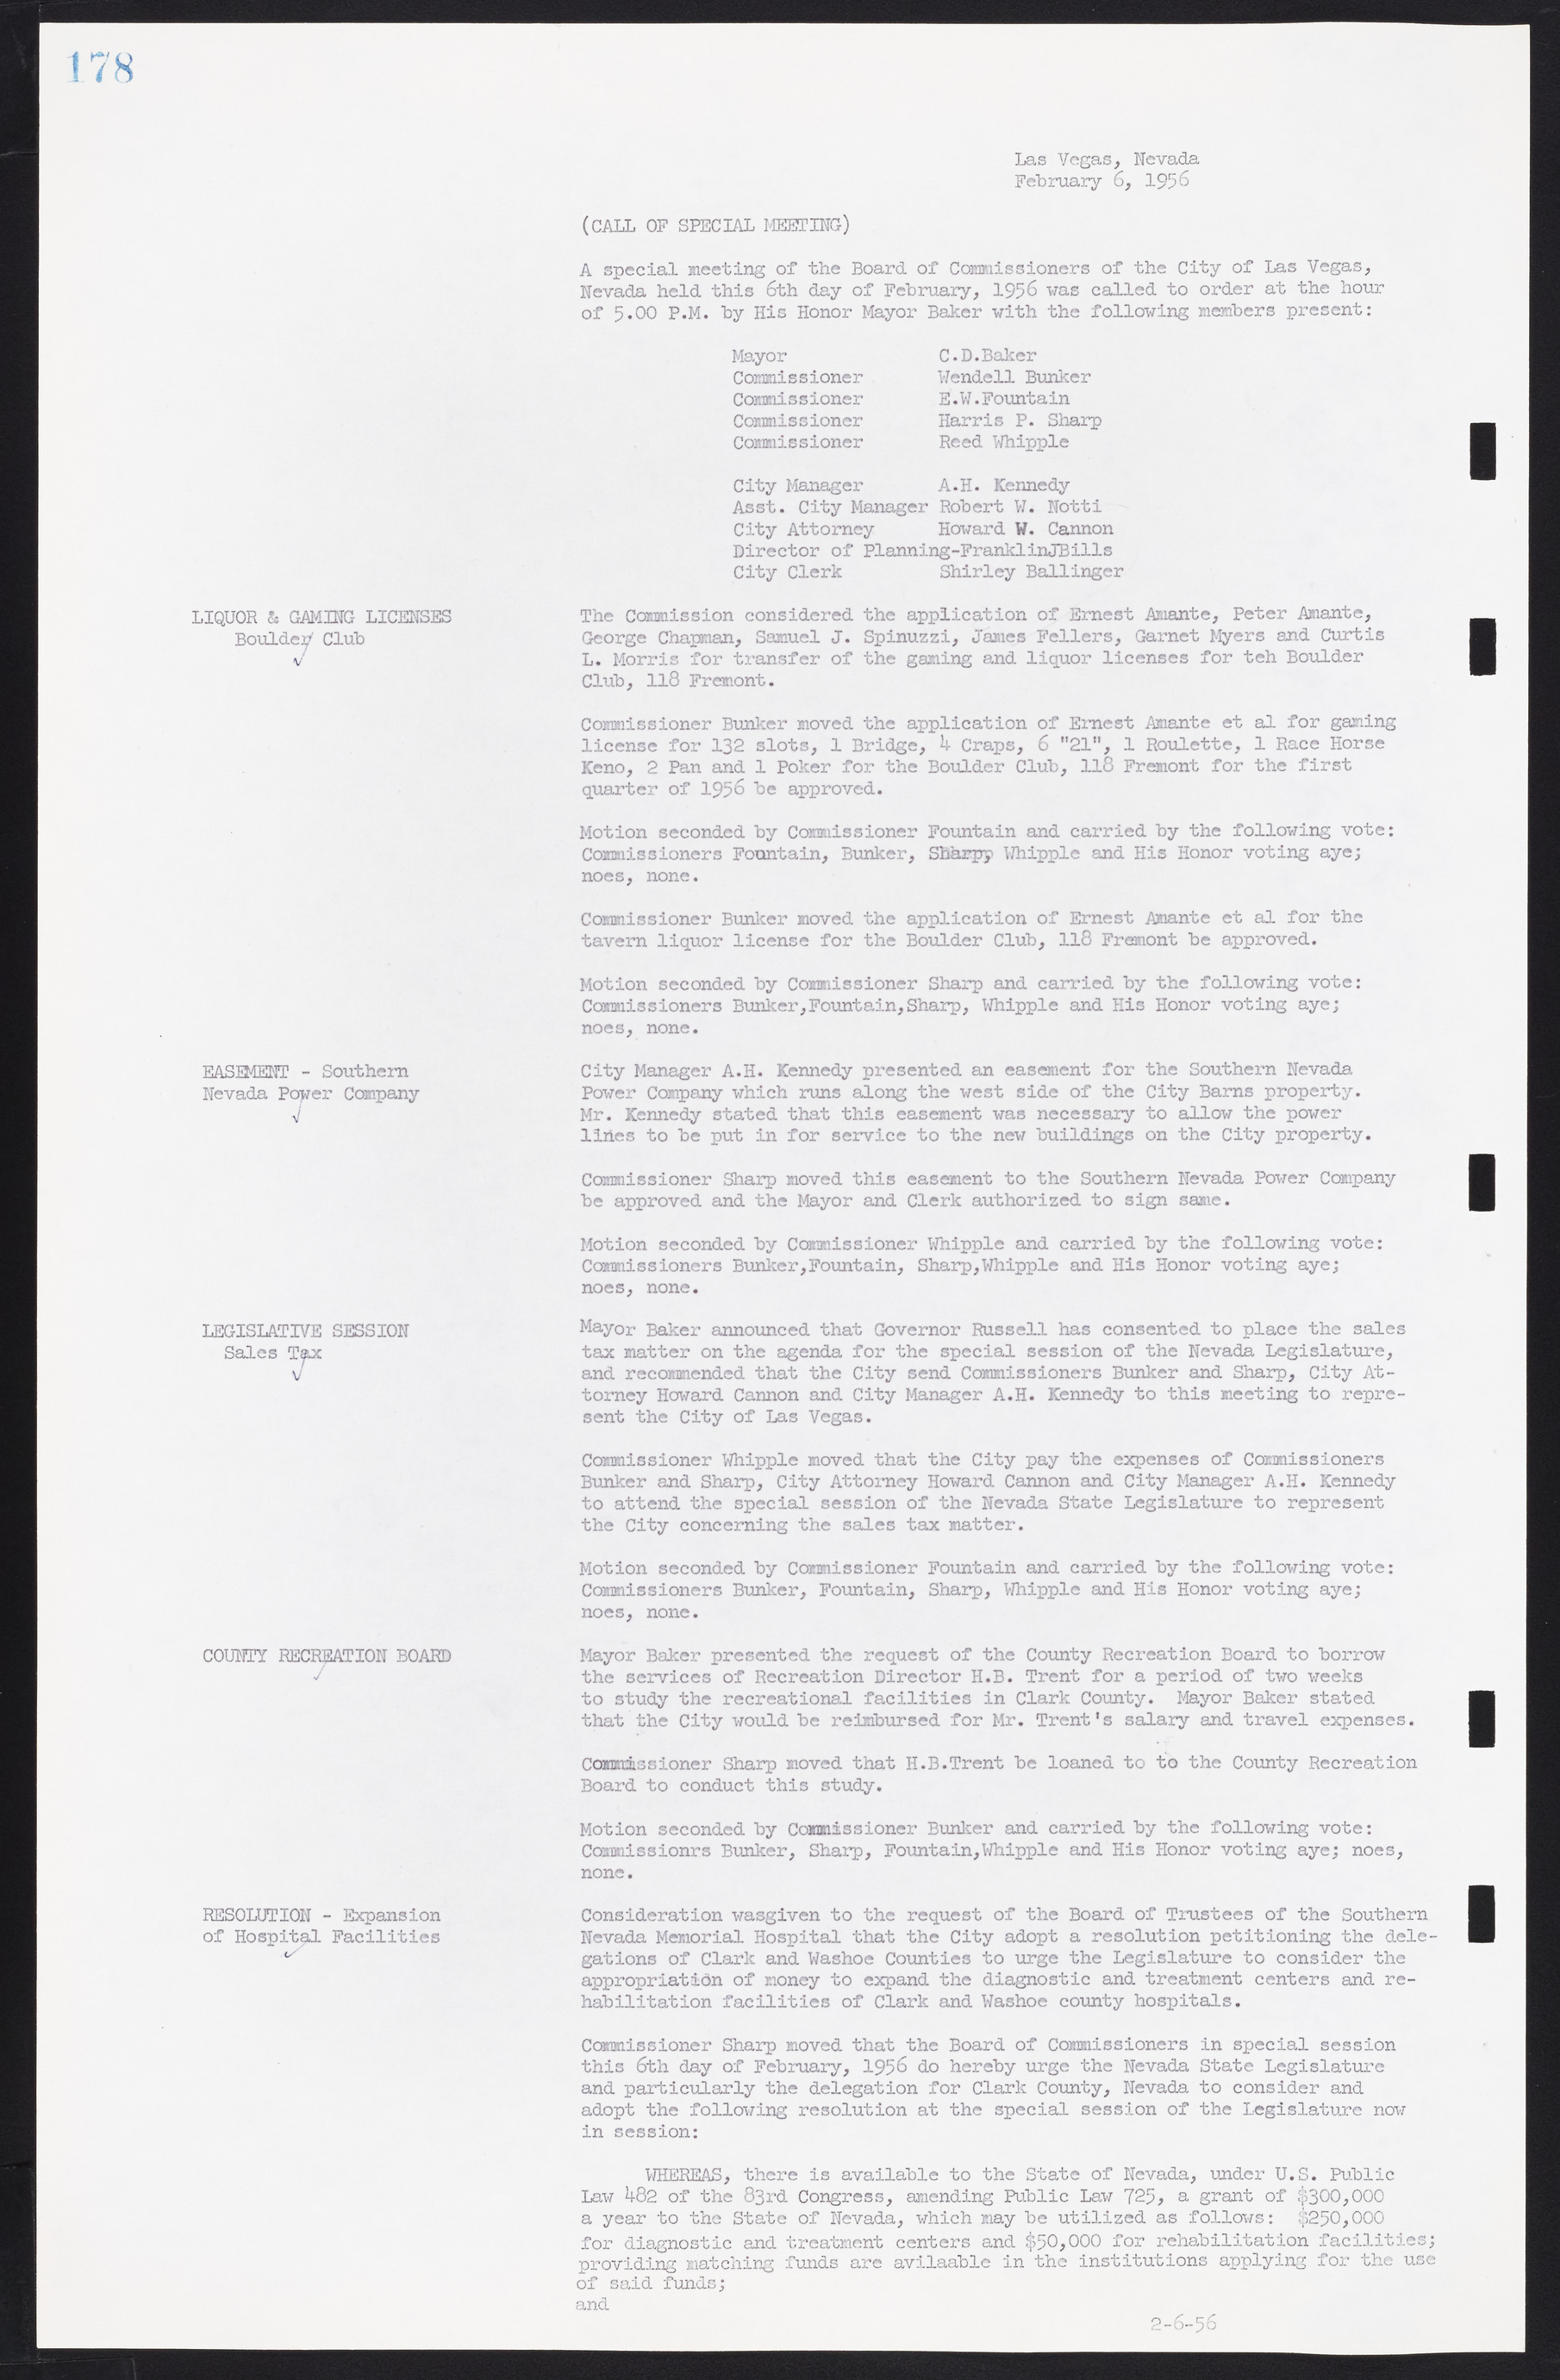 Las Vegas City Commission Minutes, September 21, 1955 to November 20, 1957, lvc000010-194